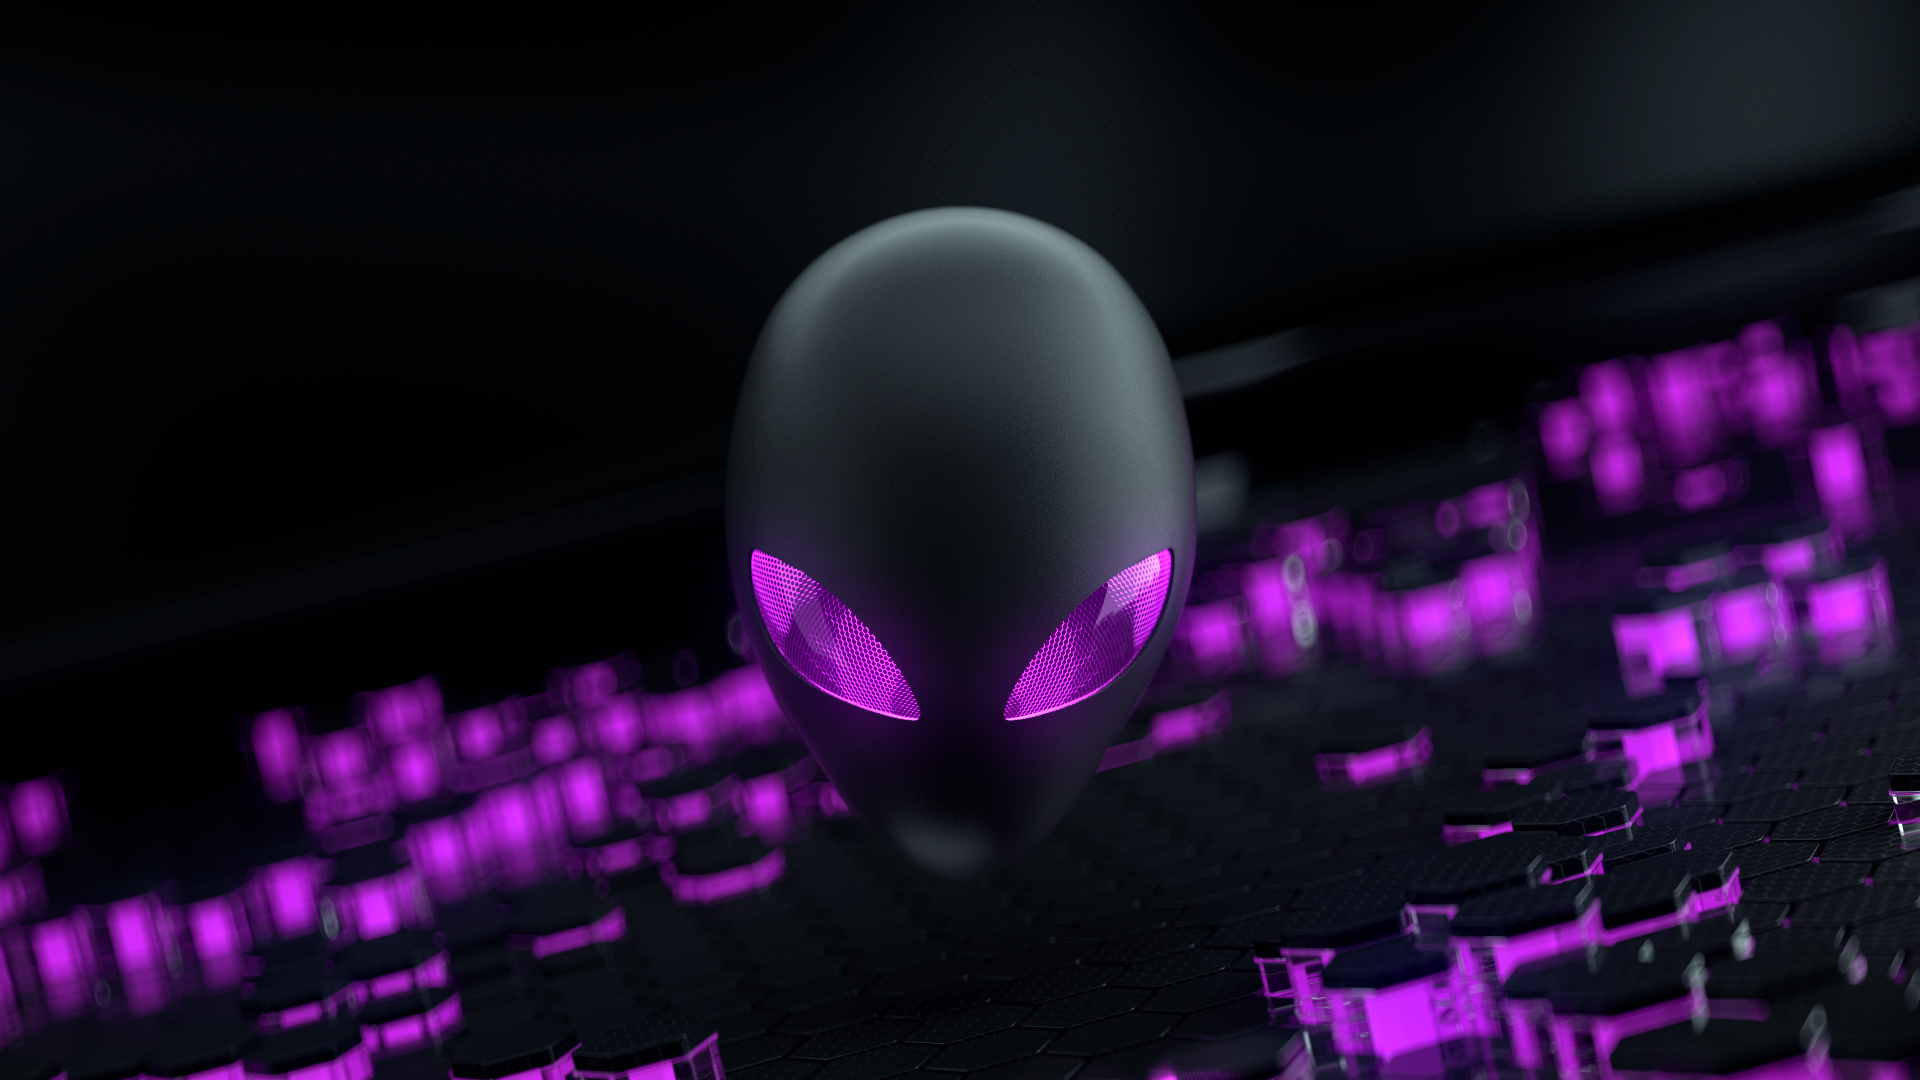 alienware wallpaper purple